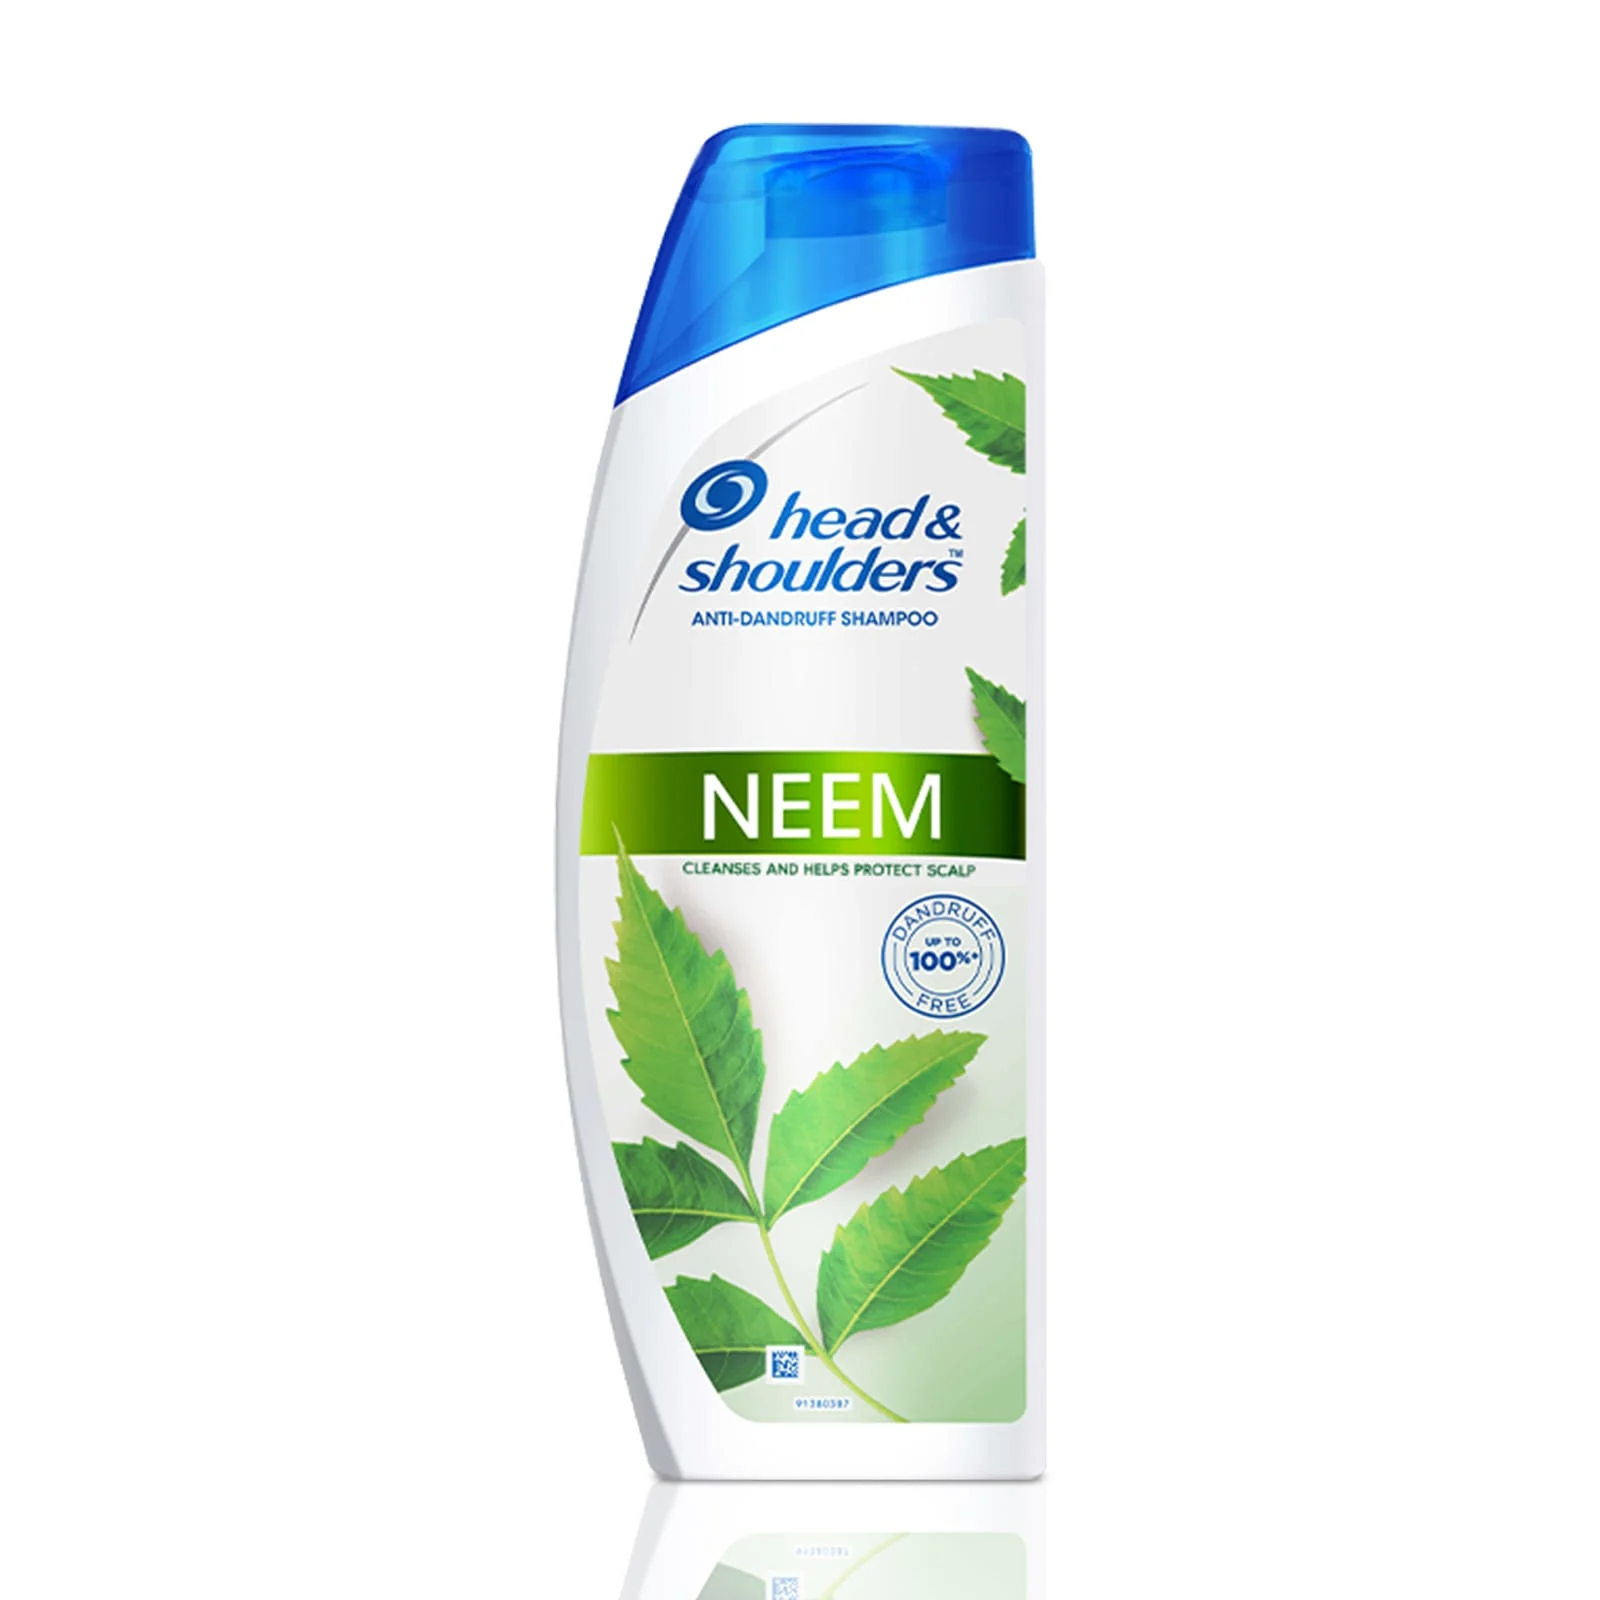 6. Neem anti-dandruff shampoo: